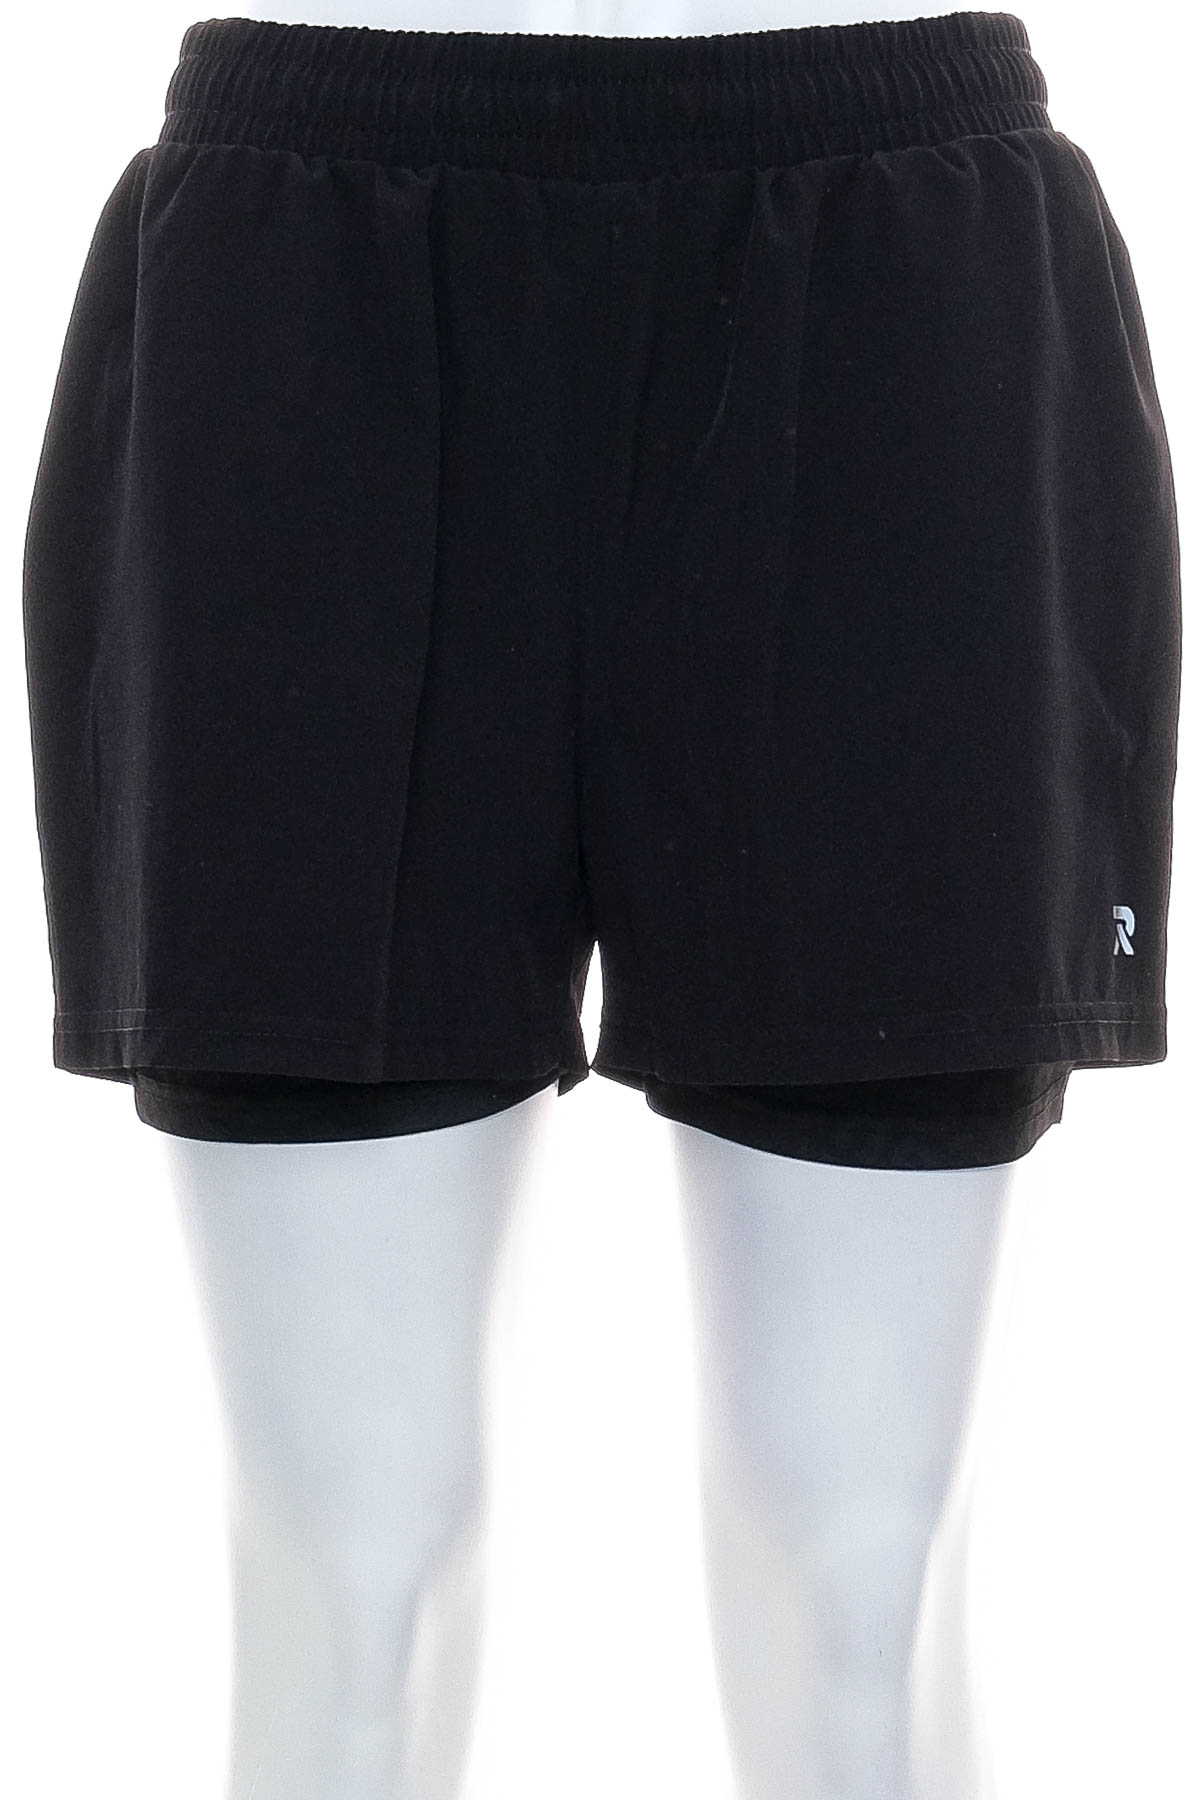 Women's shorts - Redmax - 0